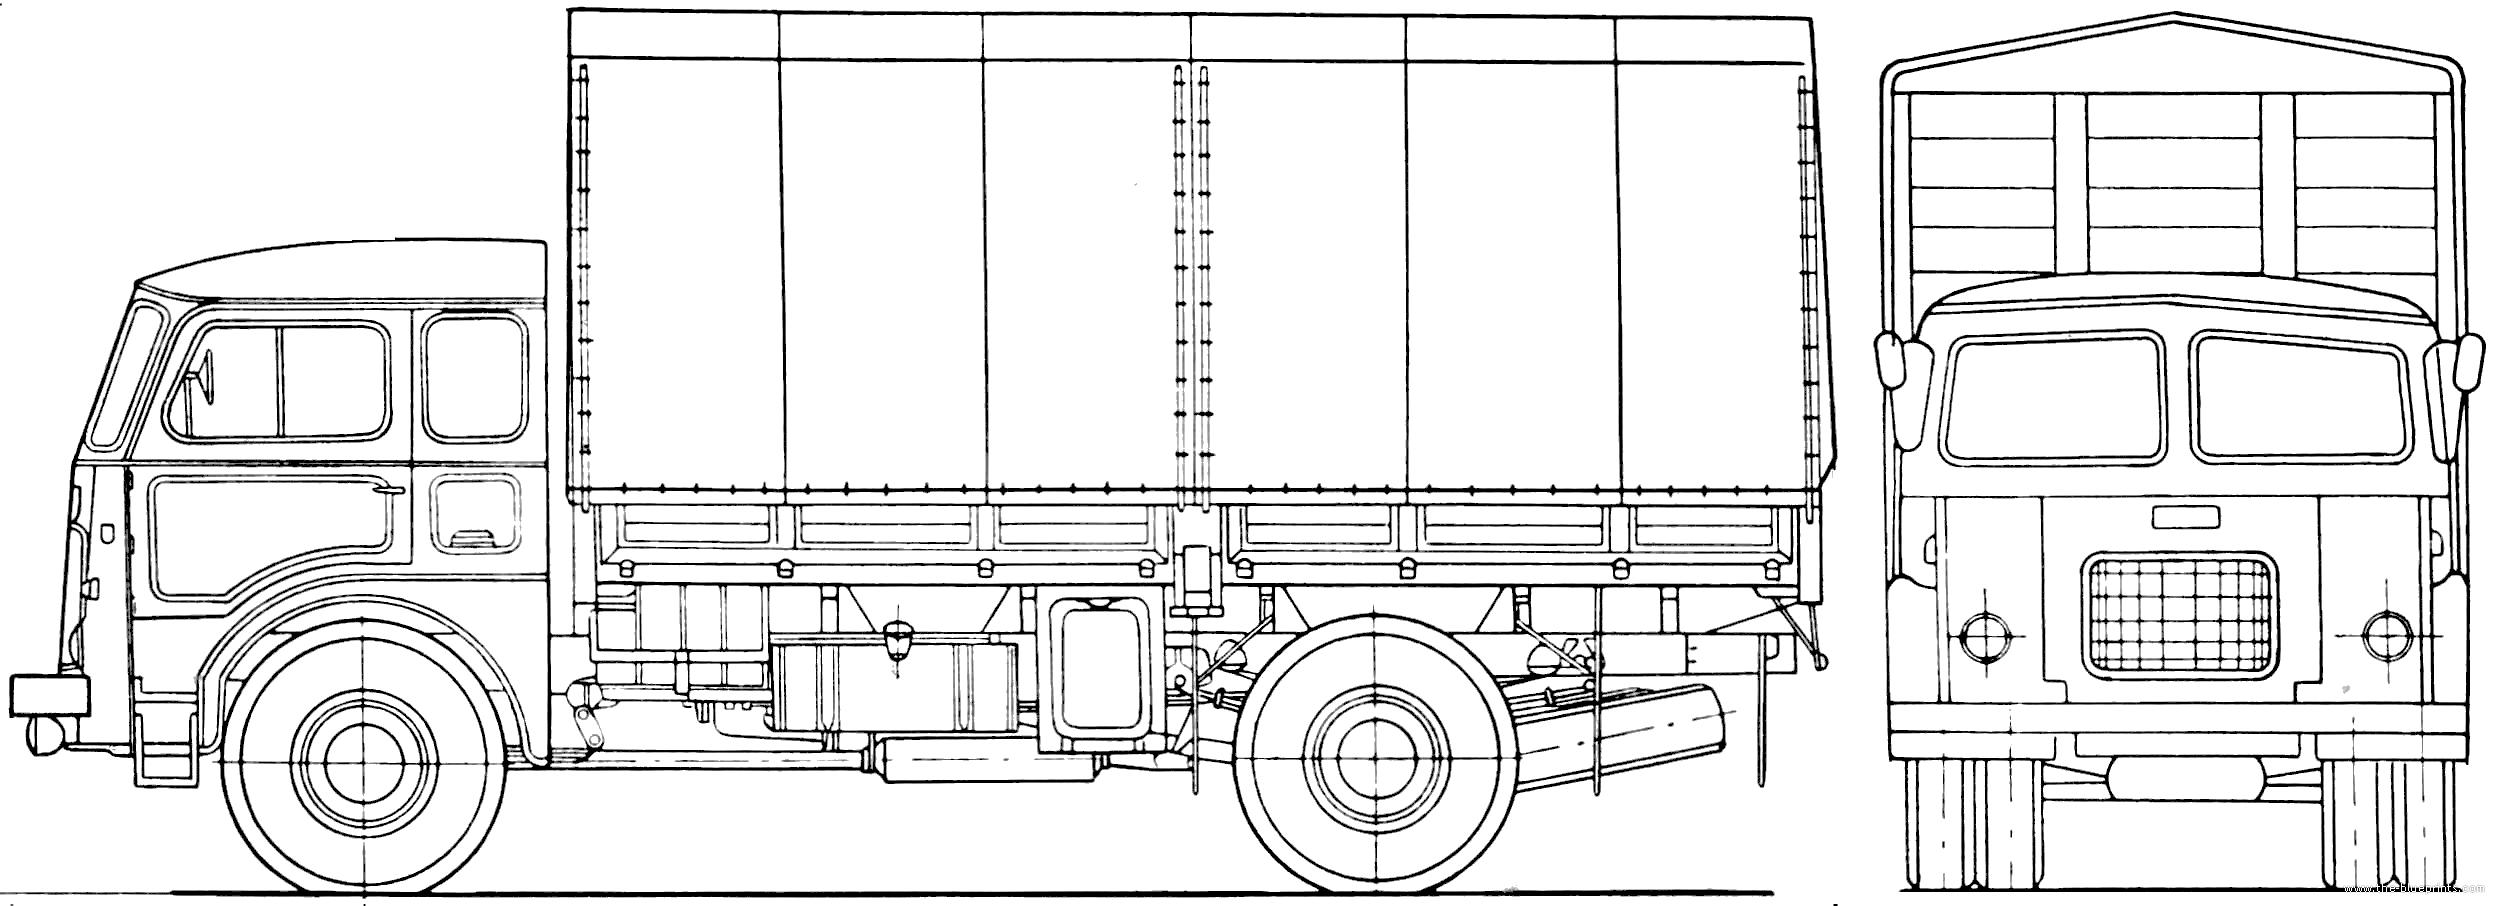 The-Blueprints.com - Blueprints > Trucks > Trucks > Jelcz 315E (